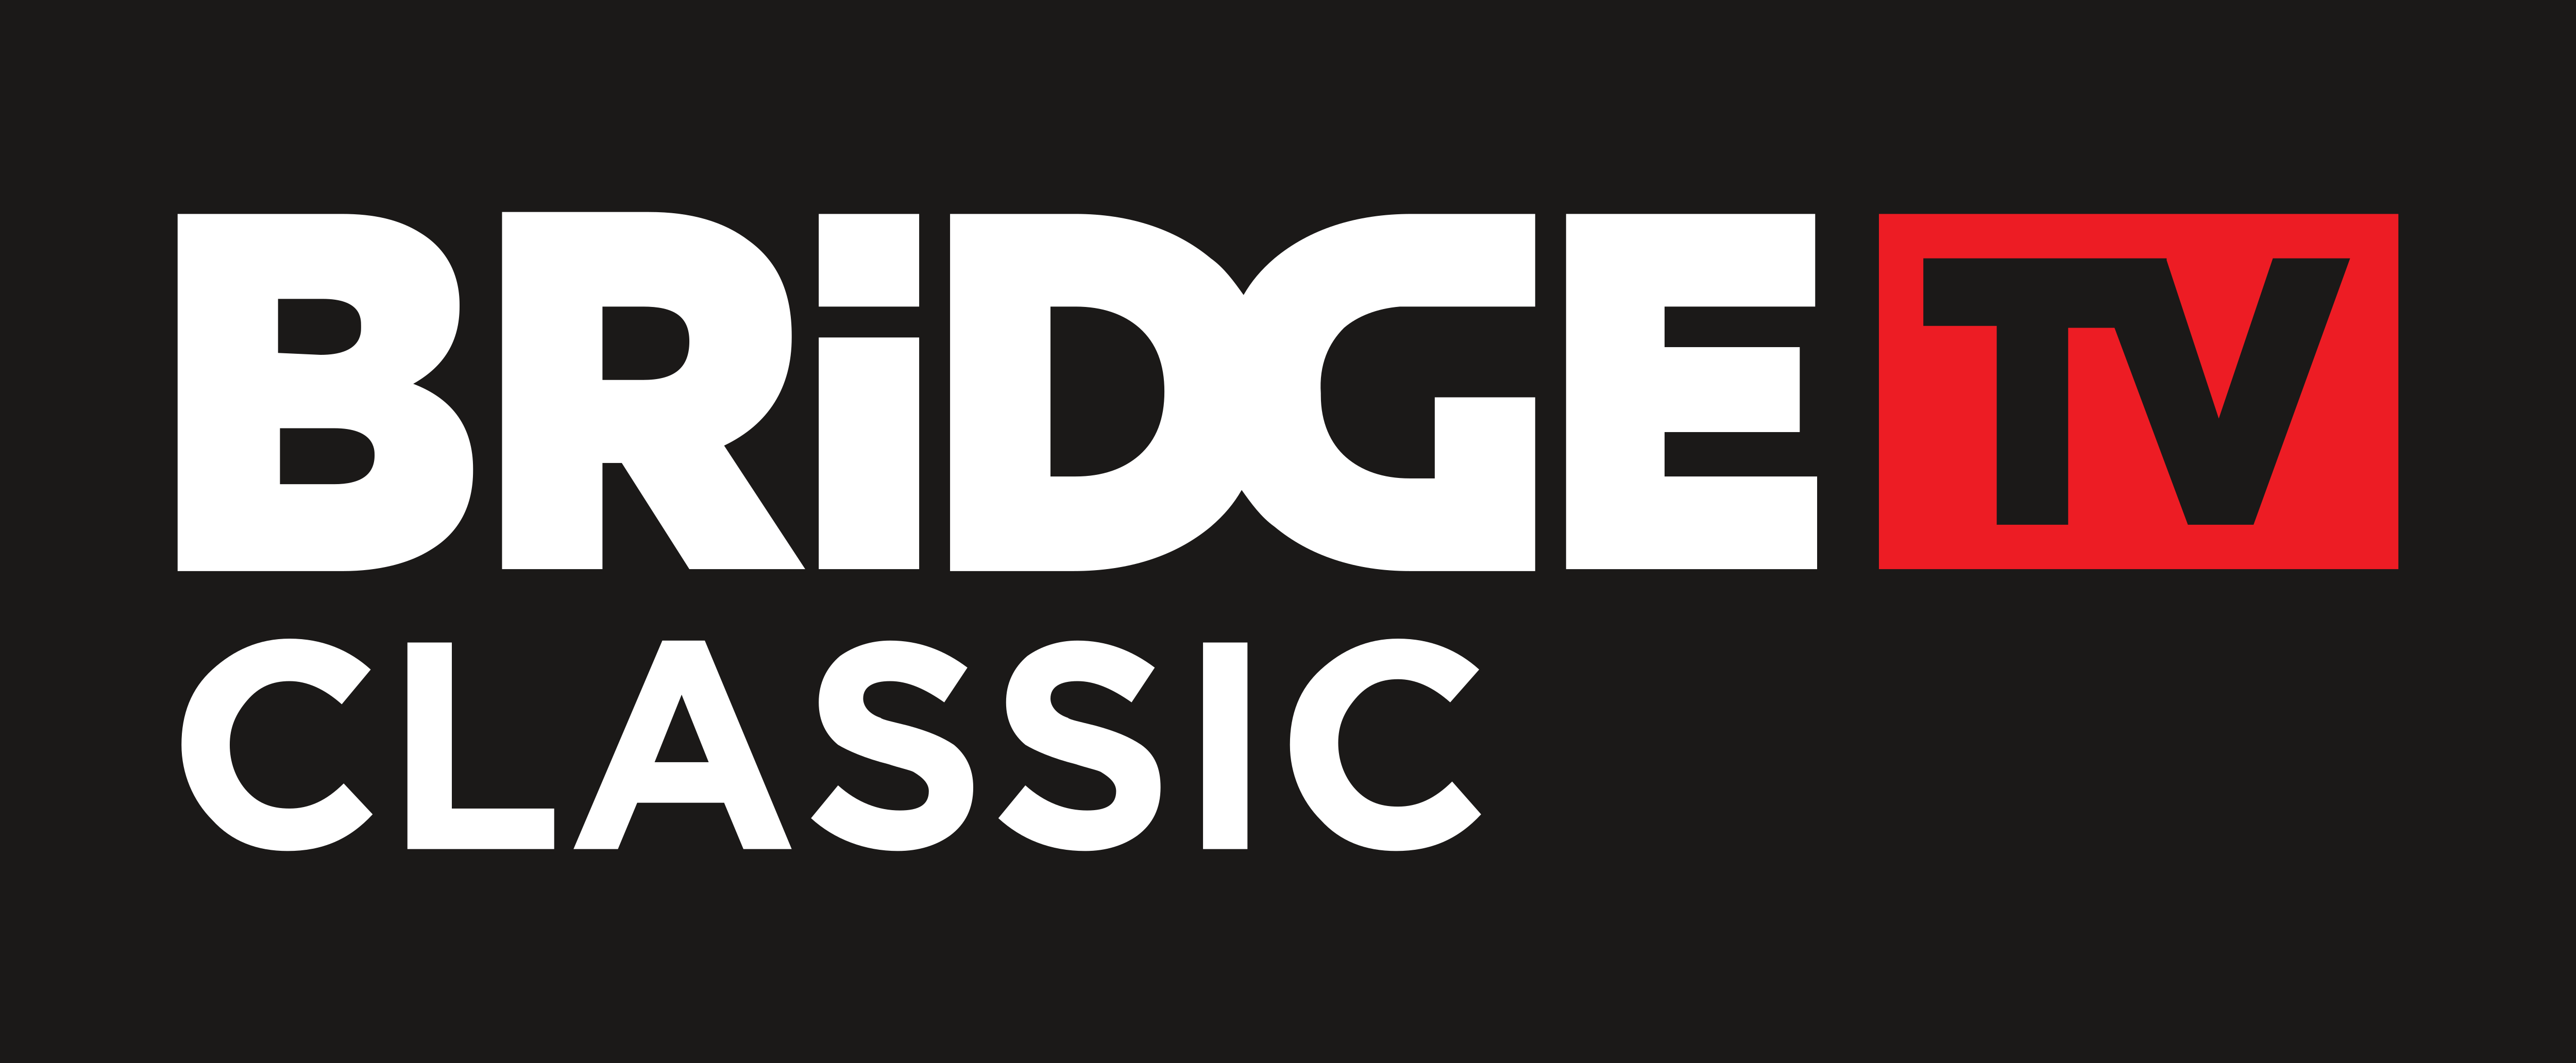 Bridge tv. Телеканал Bridge TV Classic логотип. Телеканал Bridge логотип. Бридж классика ТВ. Bridge TV логотип 2010.